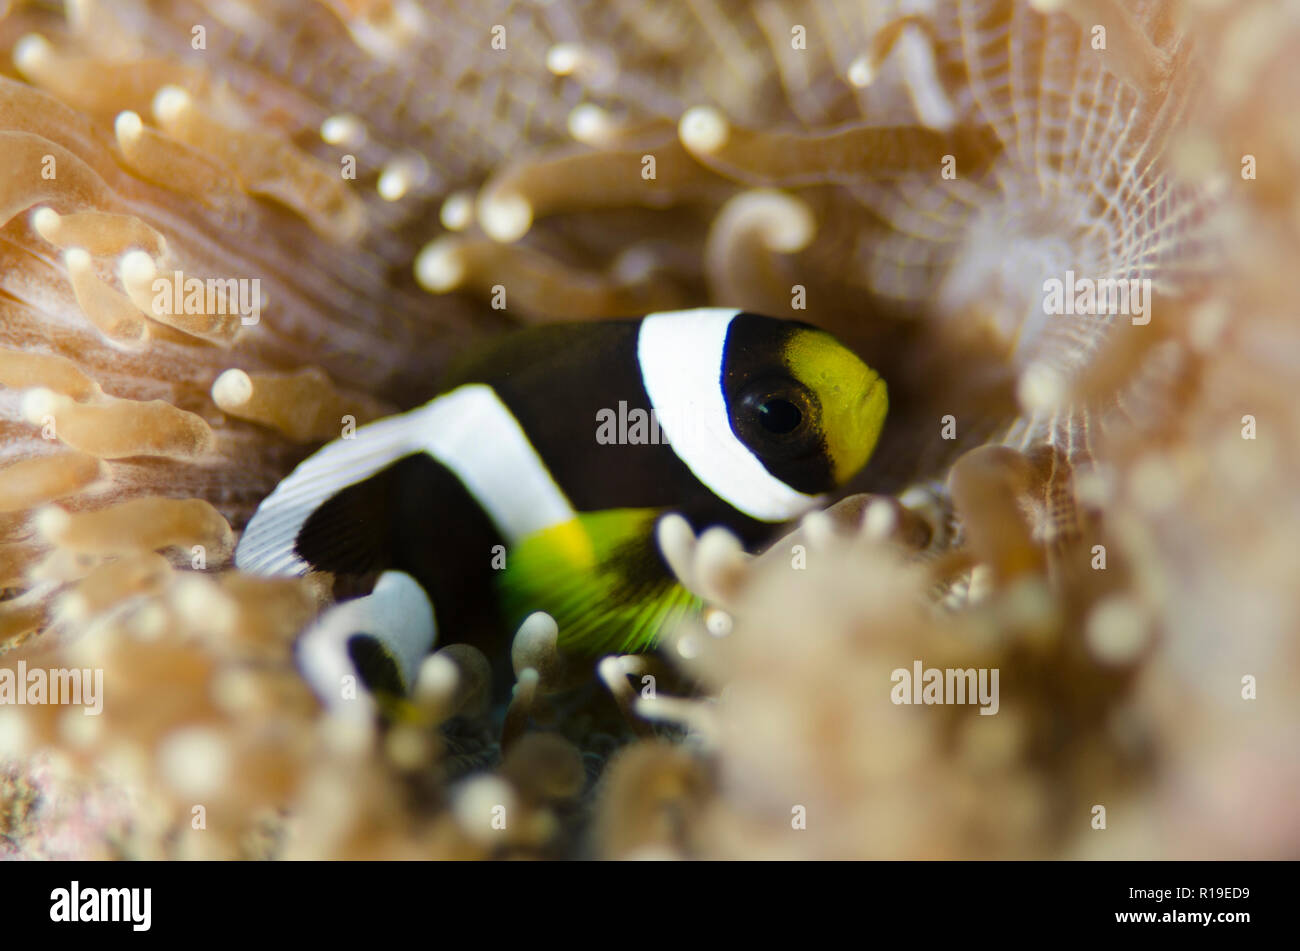 Saddleback Anemonefish, Amphiprion polymnus, in anemone, Pintu Colada dive site, Lembeh Straits, Sulawesi, Indonesia Stock Photo